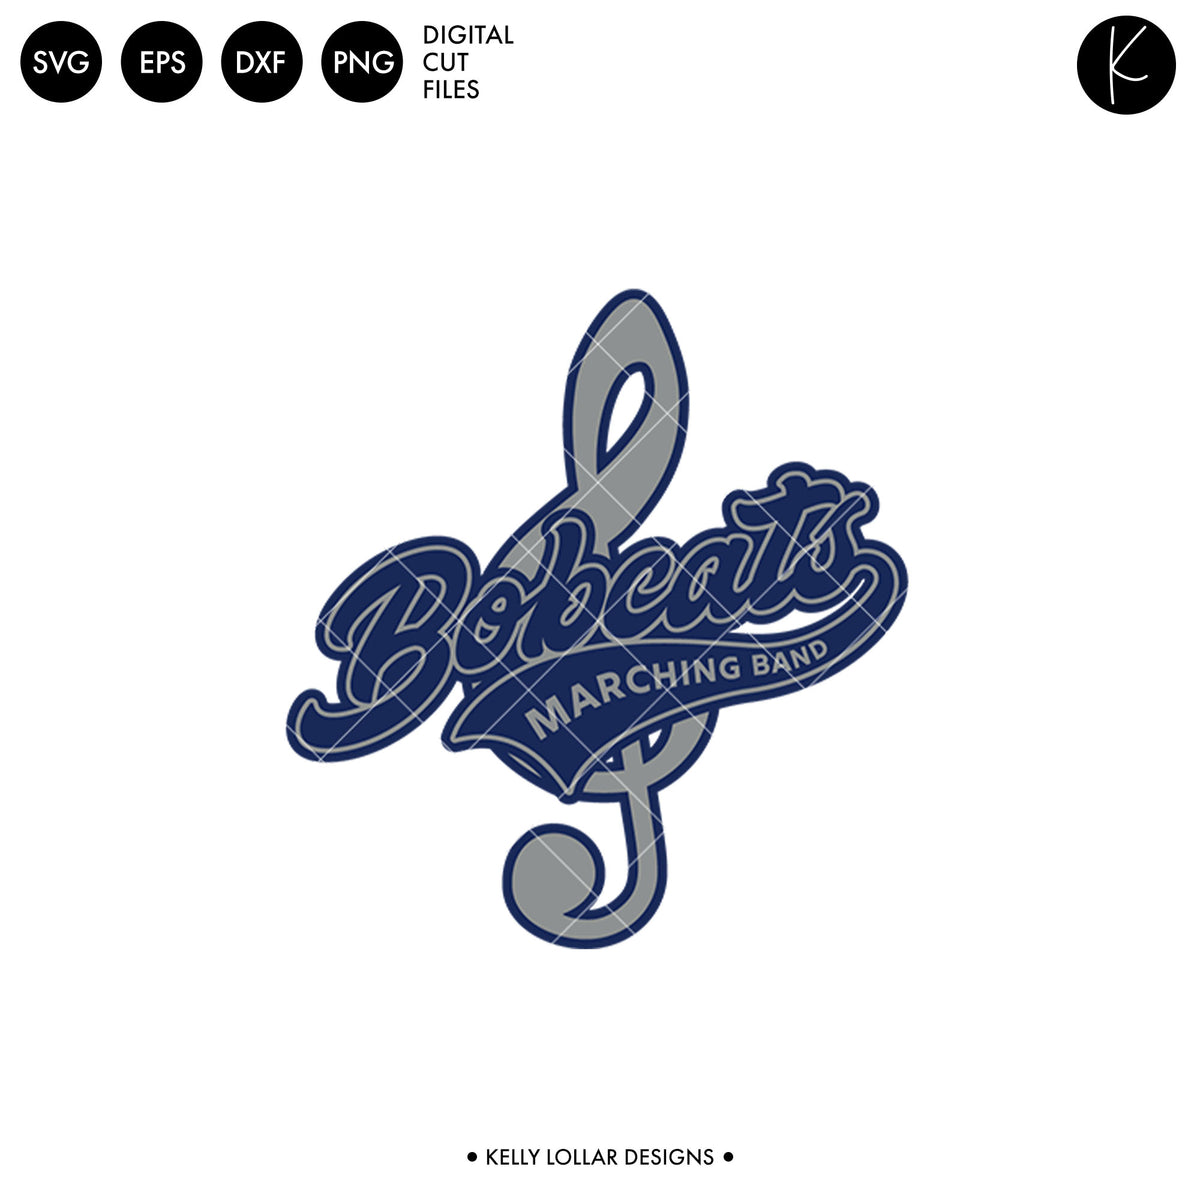 Bobcats Band Bundle | SVG DXF EPS PNG Cut Files